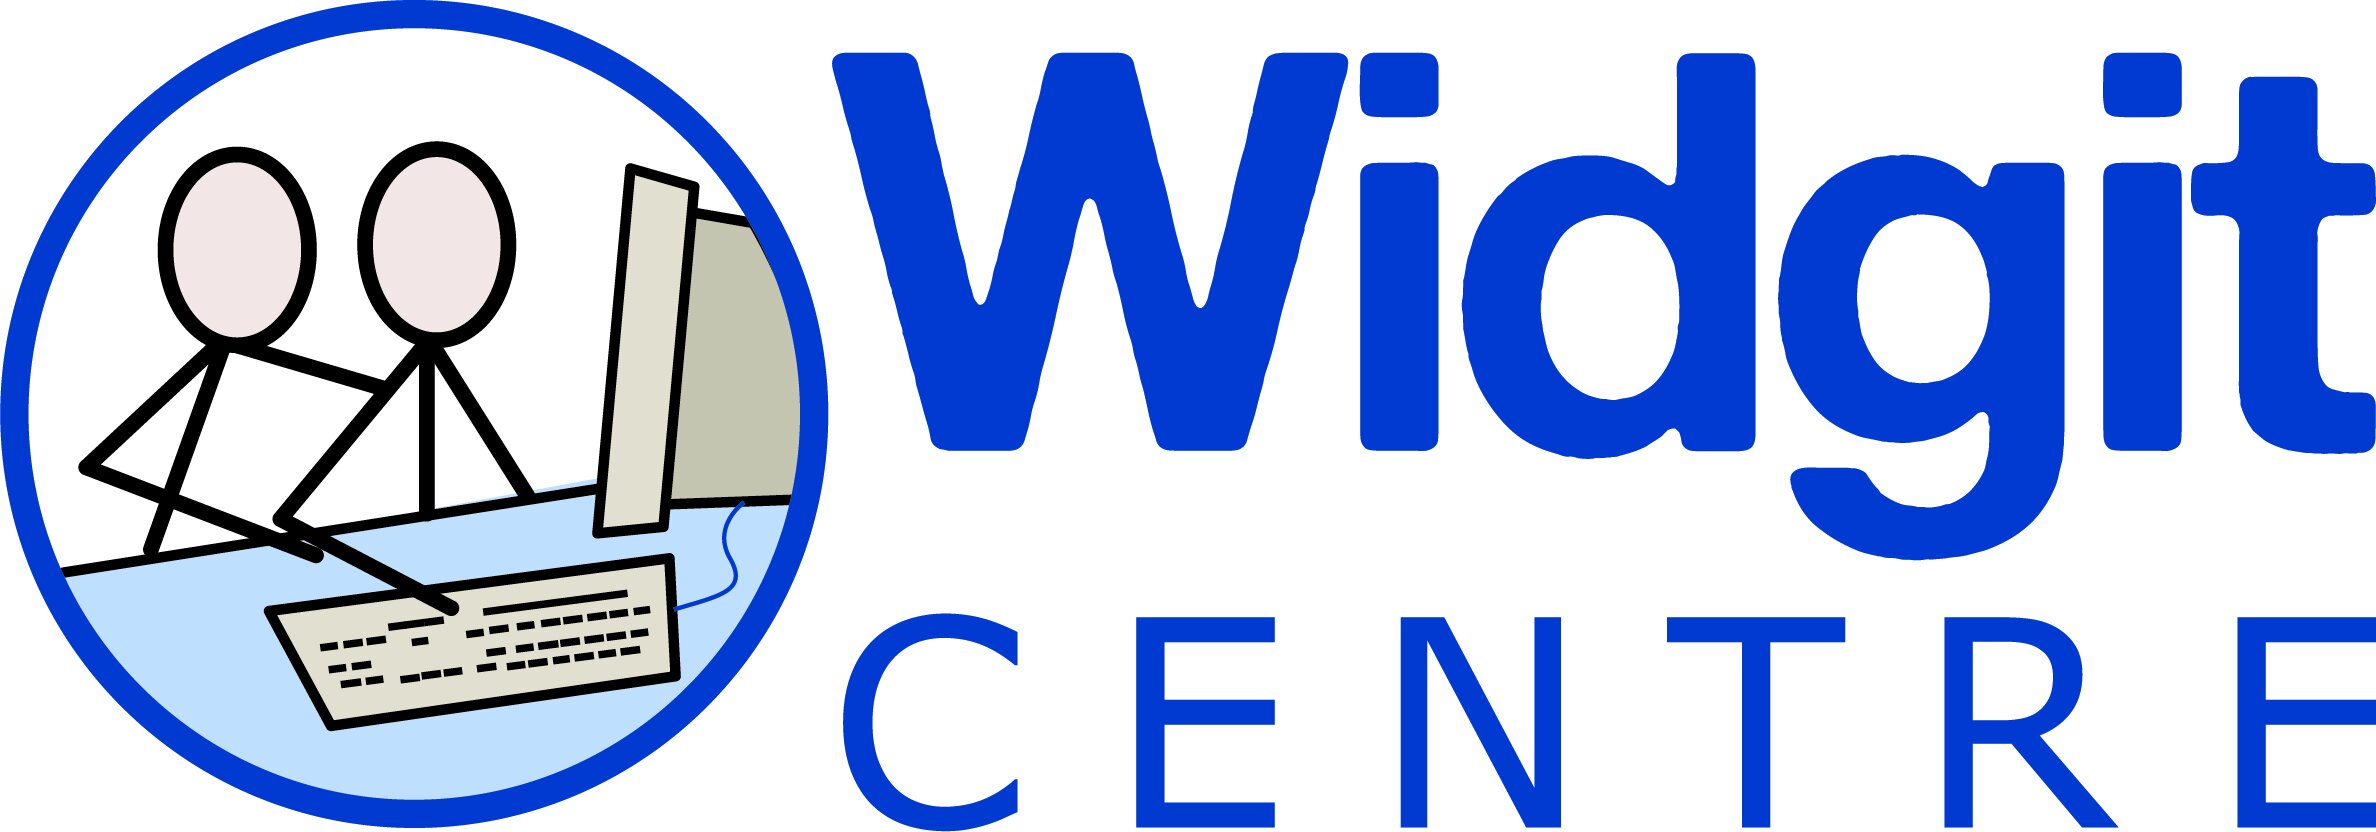 Widgit Centre logo.jpg